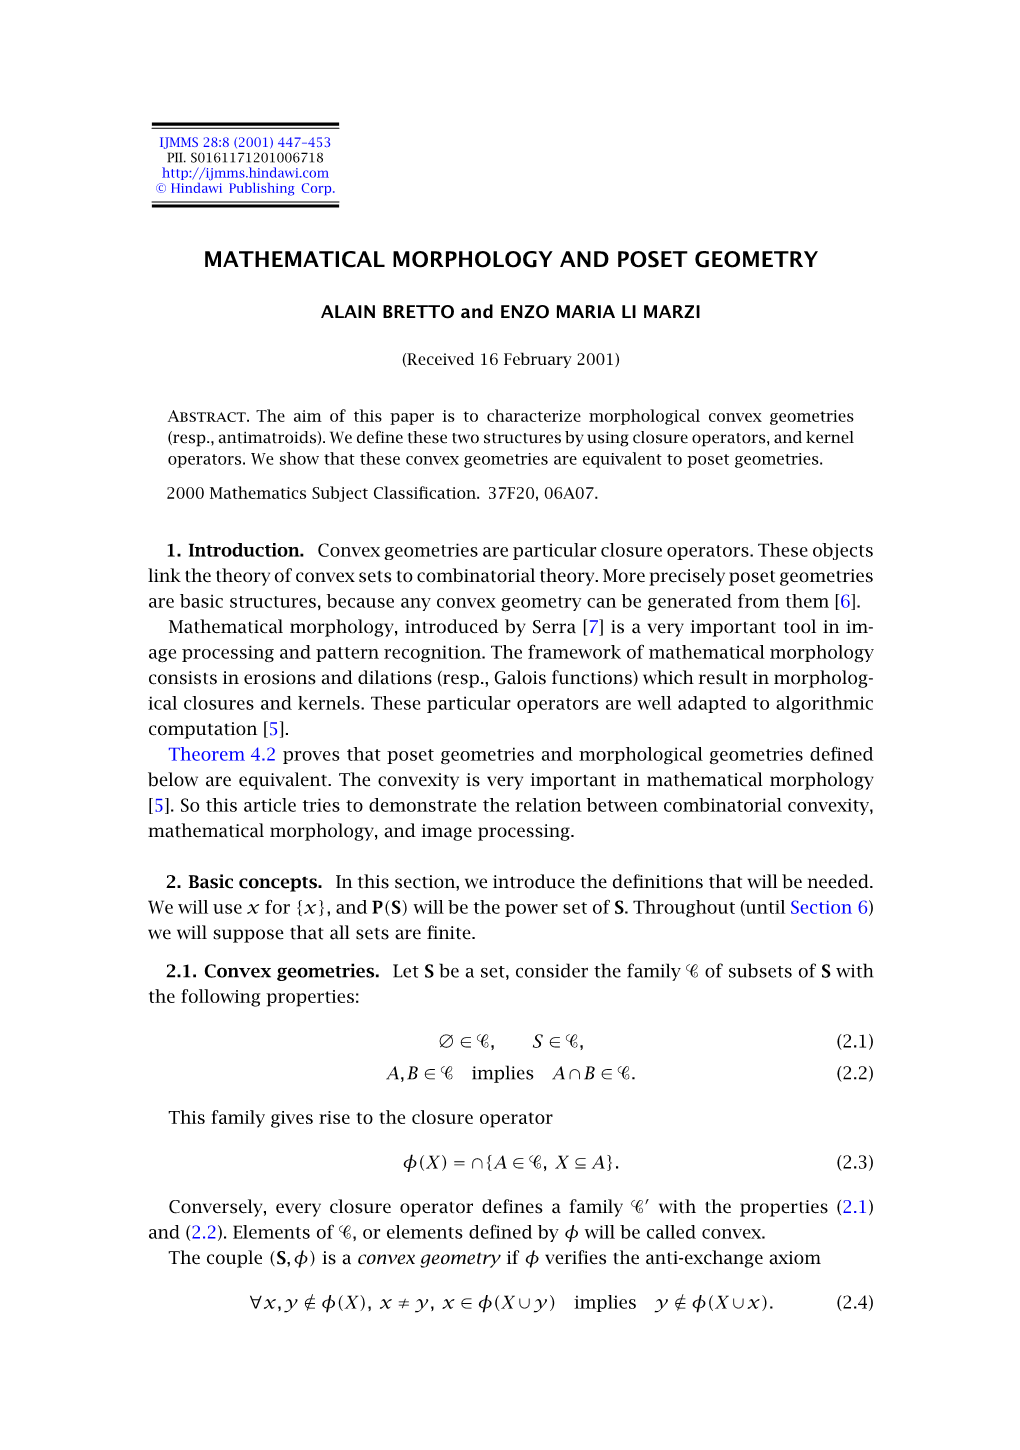 Mathematical Morphology and Poset Geometry